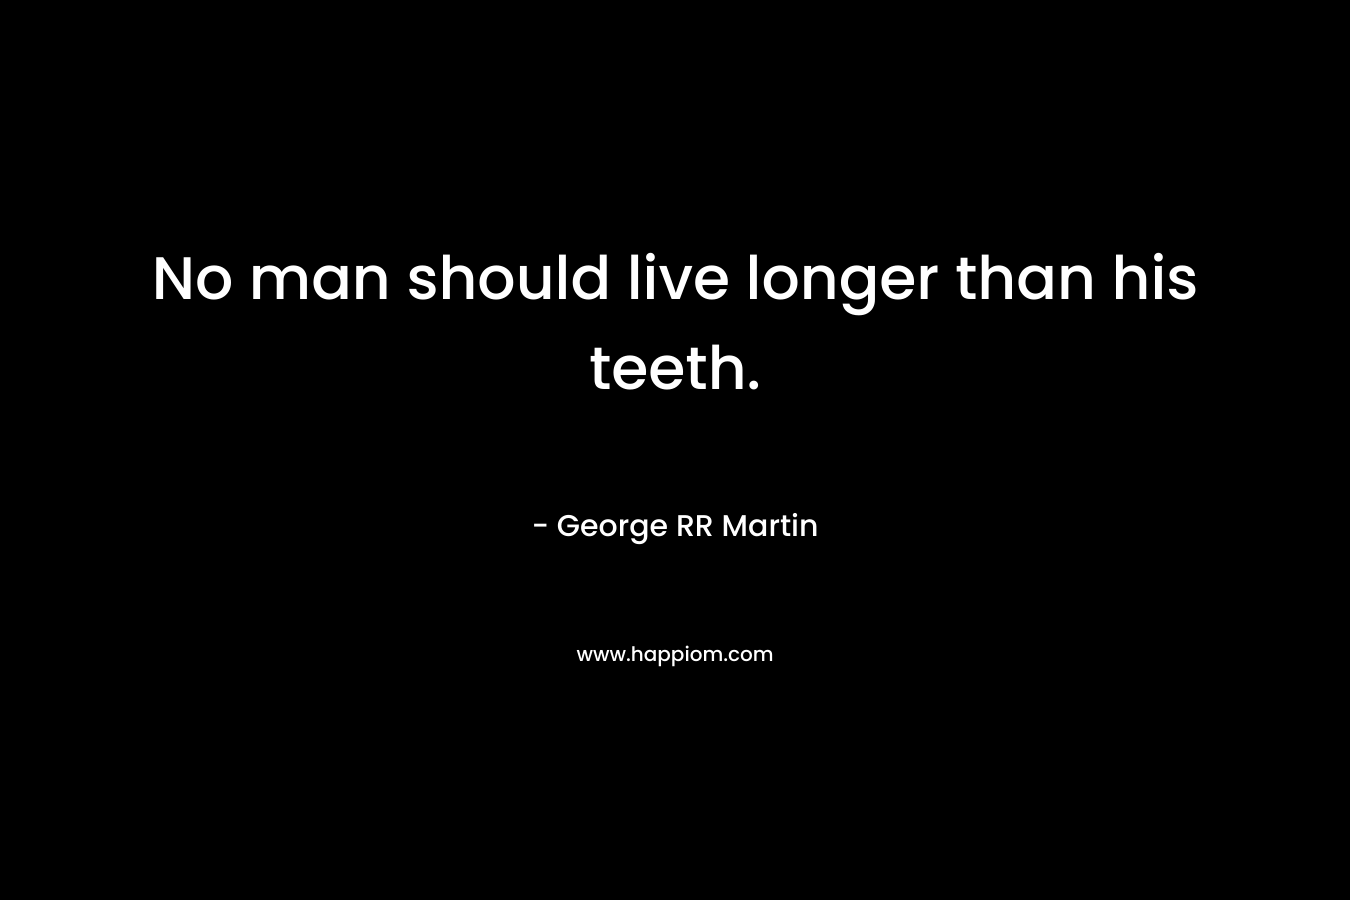 No man should live longer than his teeth.